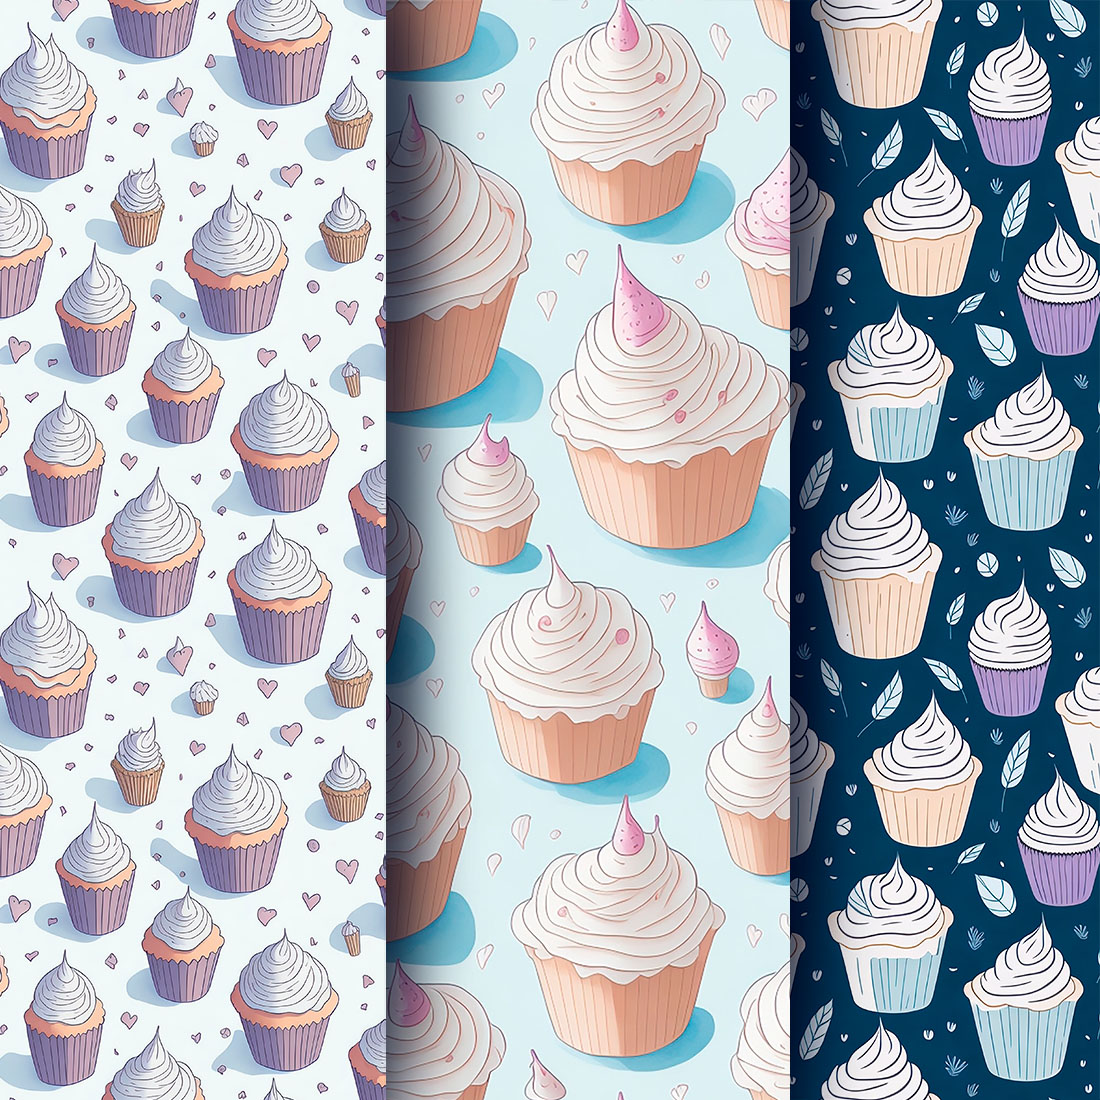 cupcake pattern designs 3 set preview image.